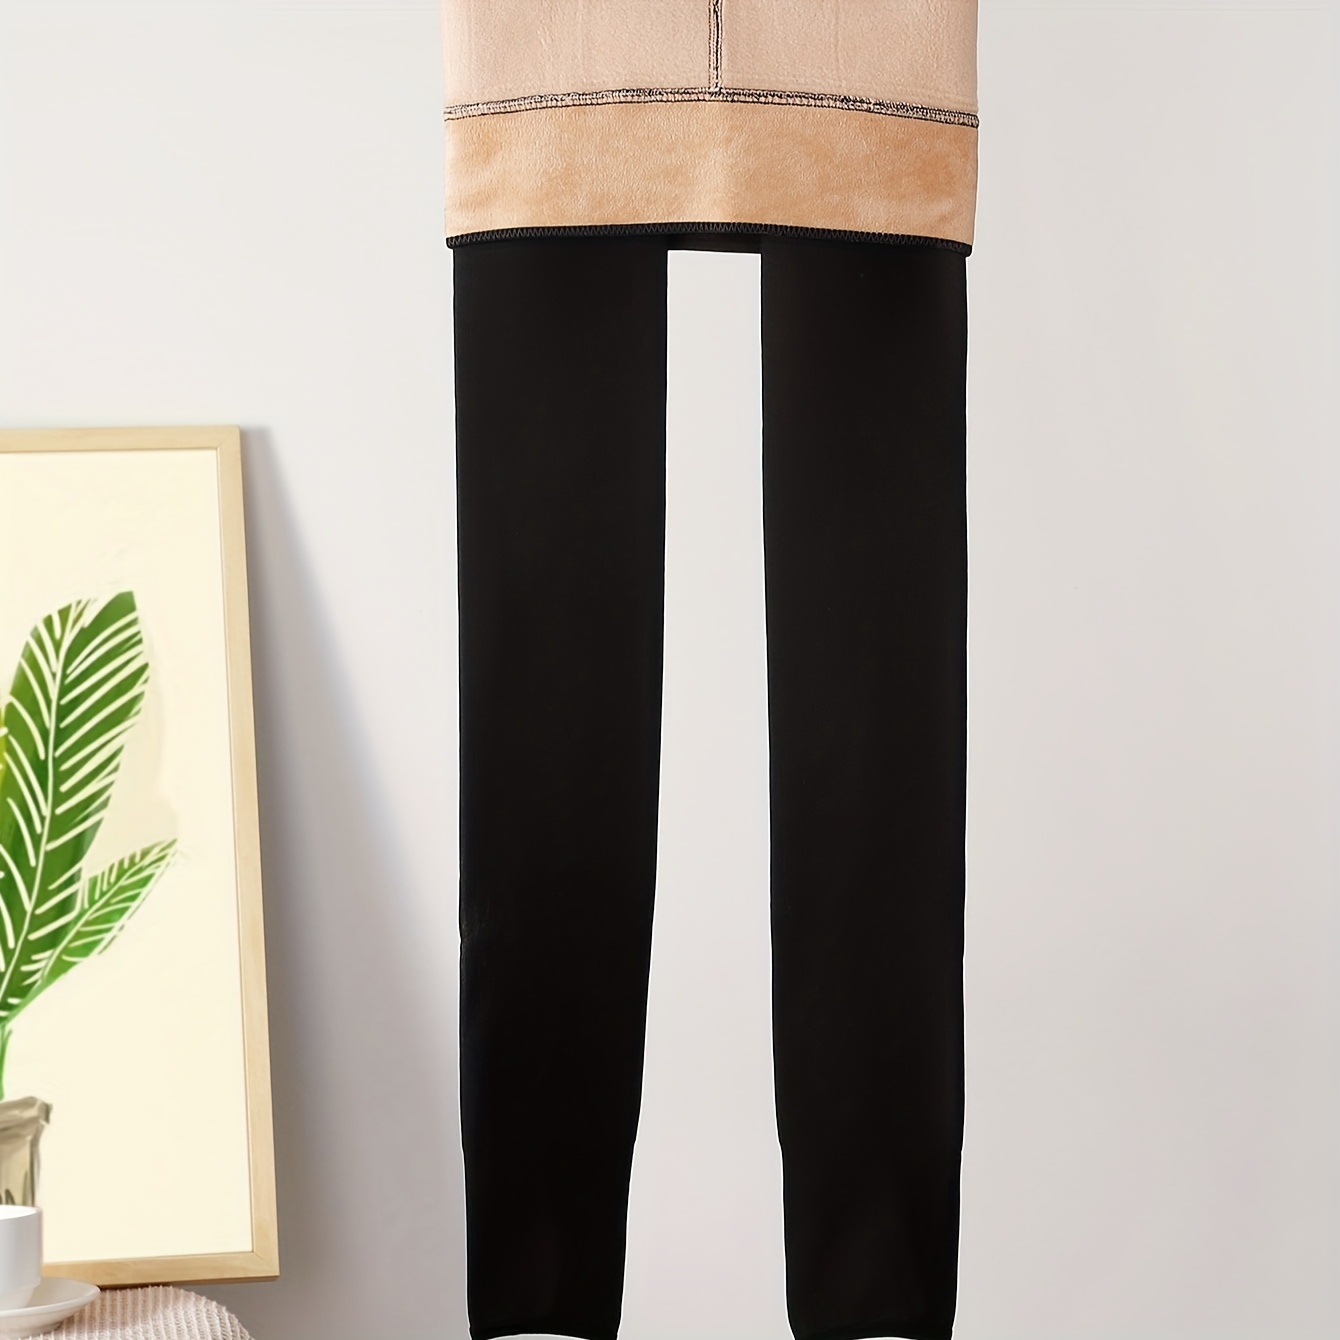 Buy LEBAMI Women Fleece Lined Tights Fake Translucent Thermal Leggings  Winter Sheer Warm Pantyhose Footless Tights at